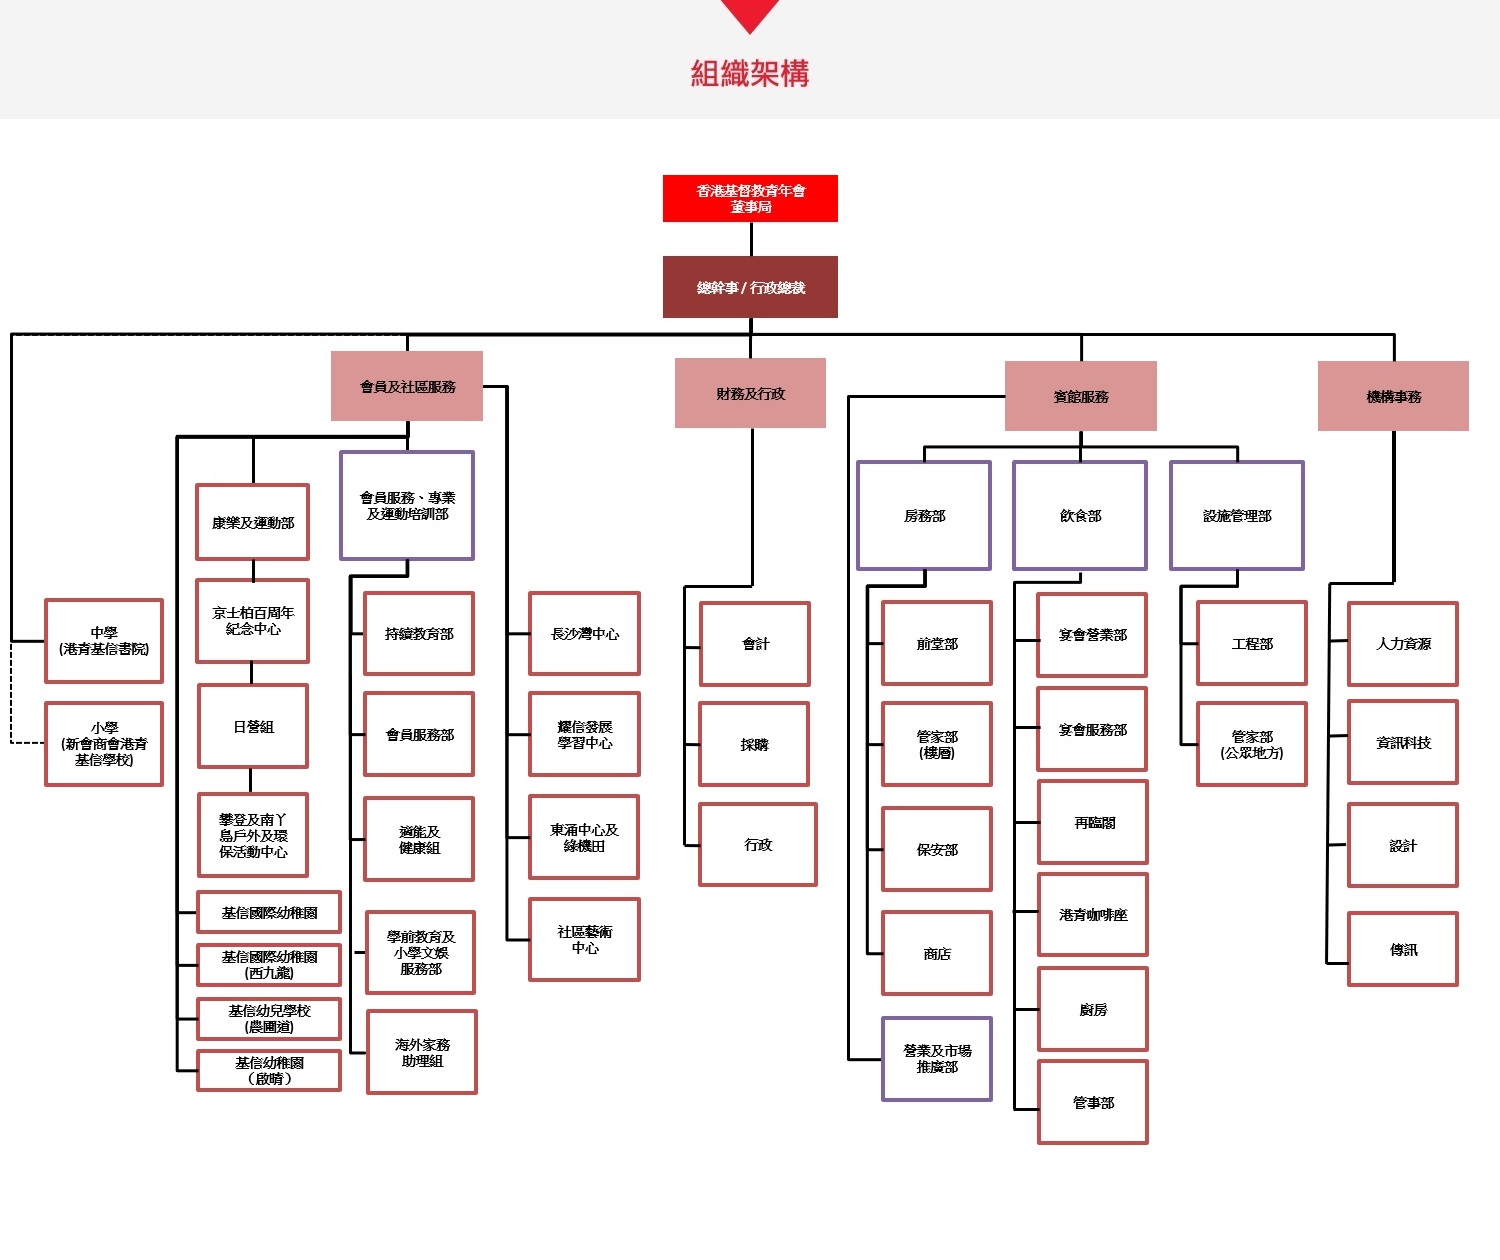 Mtr Organization Chart